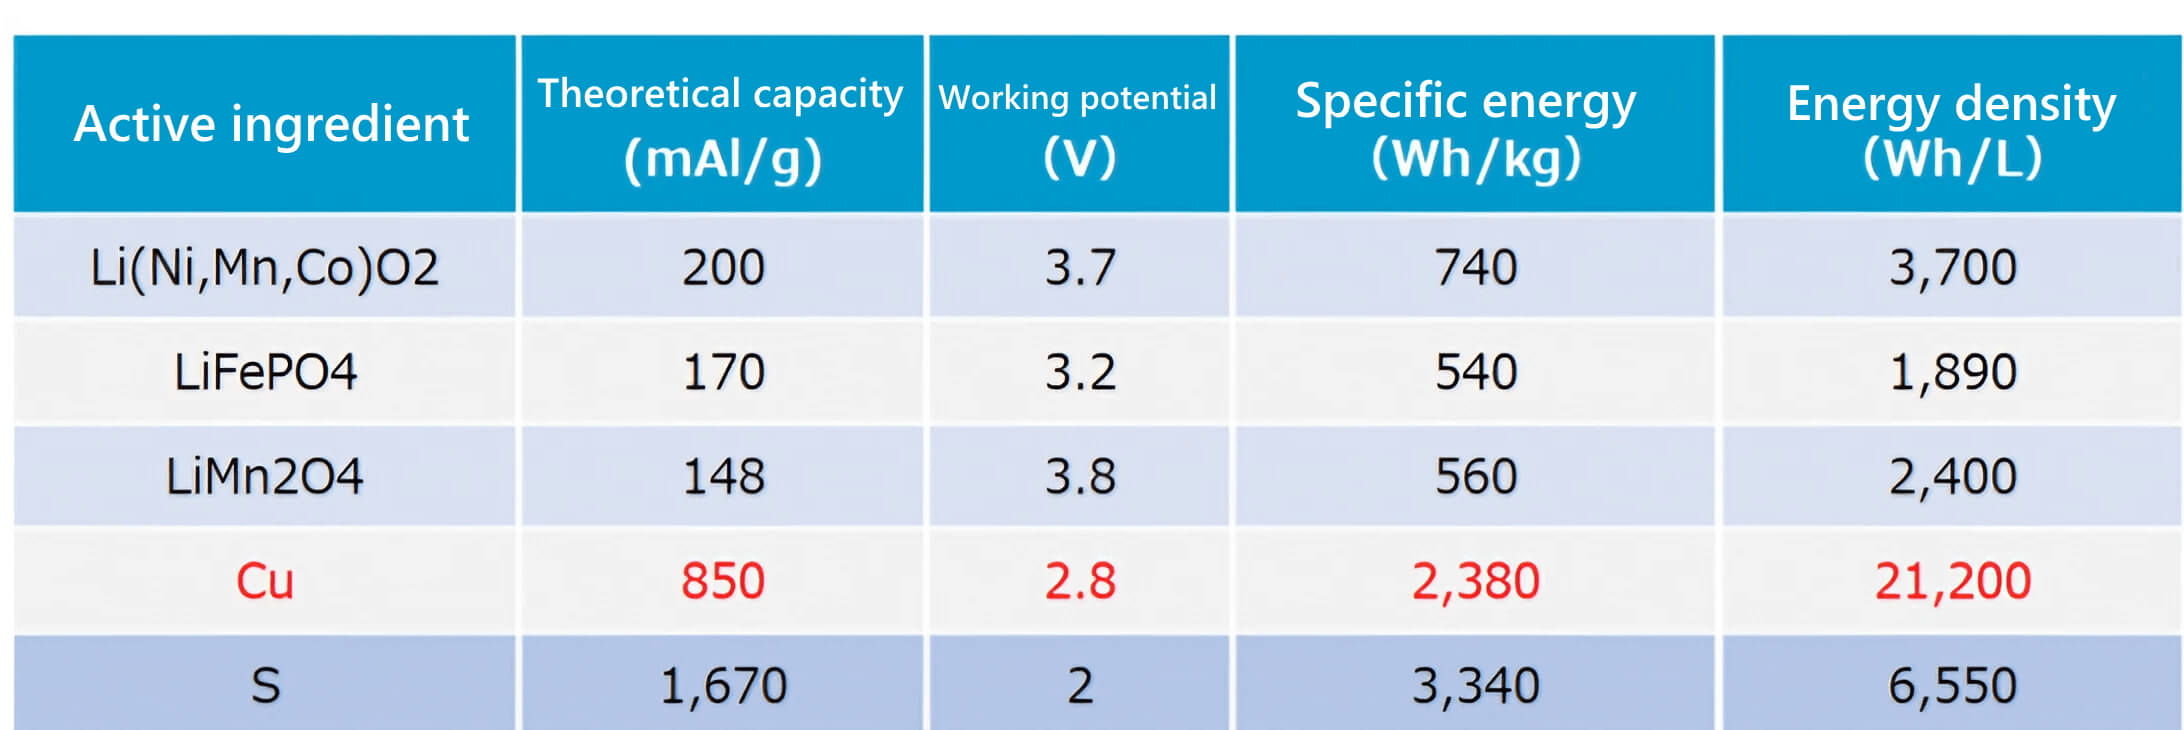 Energy Density Comparison Table